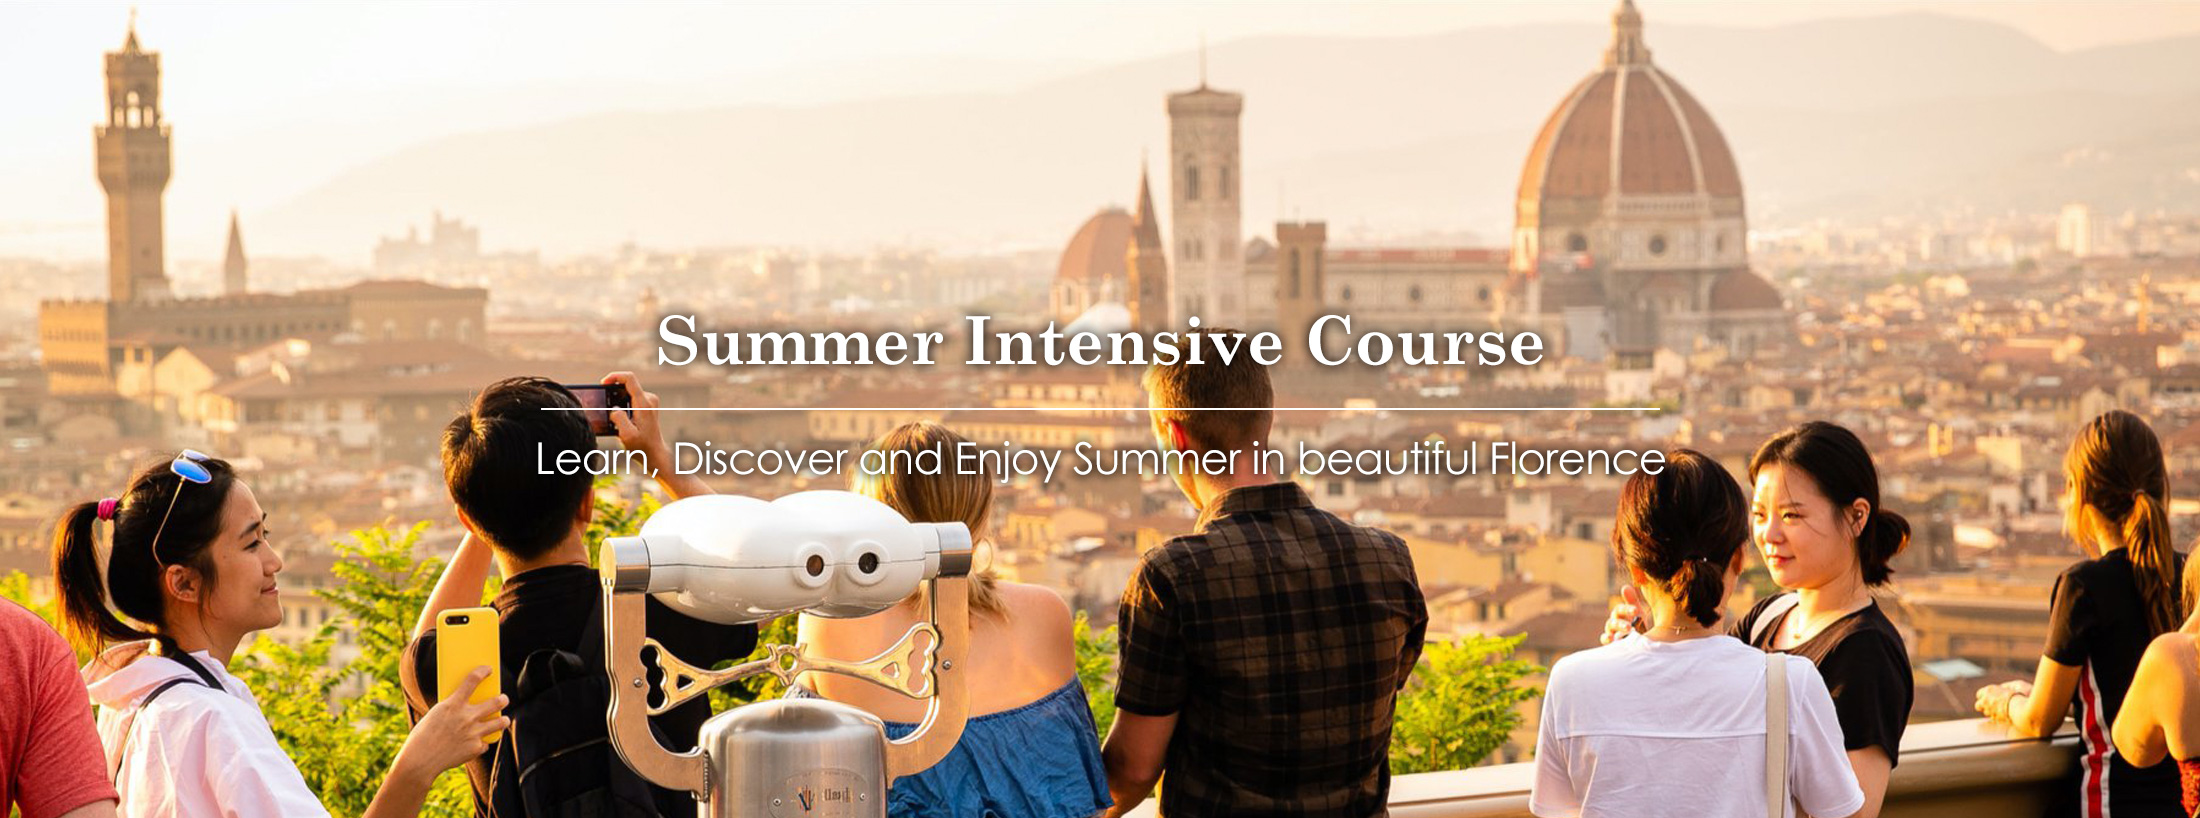 Summer Intensive Courses